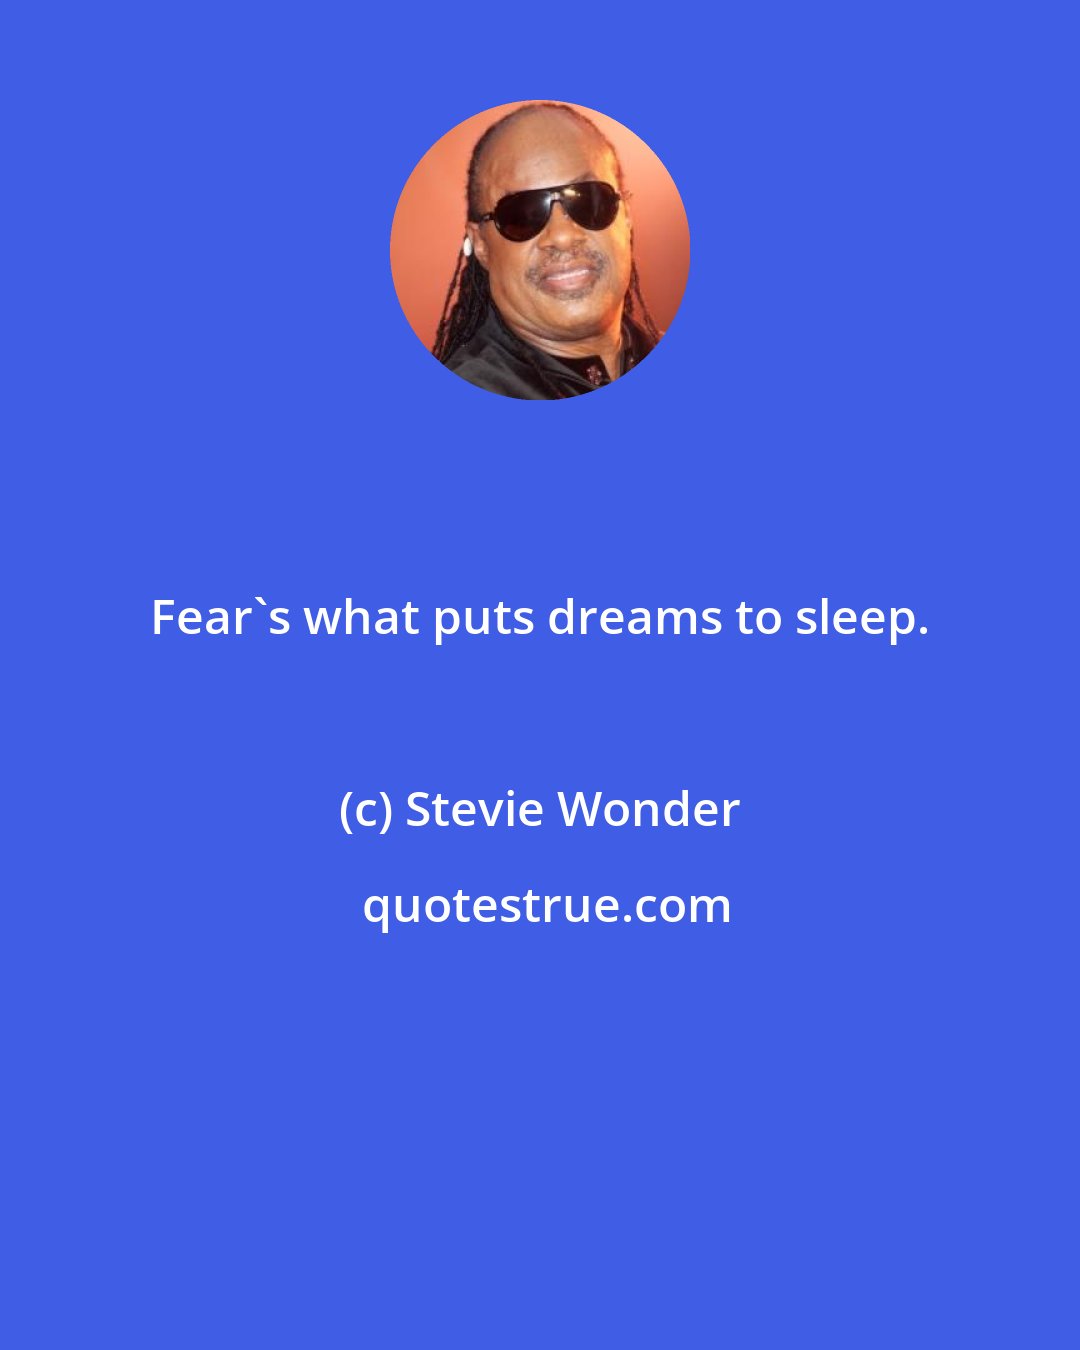 Stevie Wonder: Fear's what puts dreams to sleep.